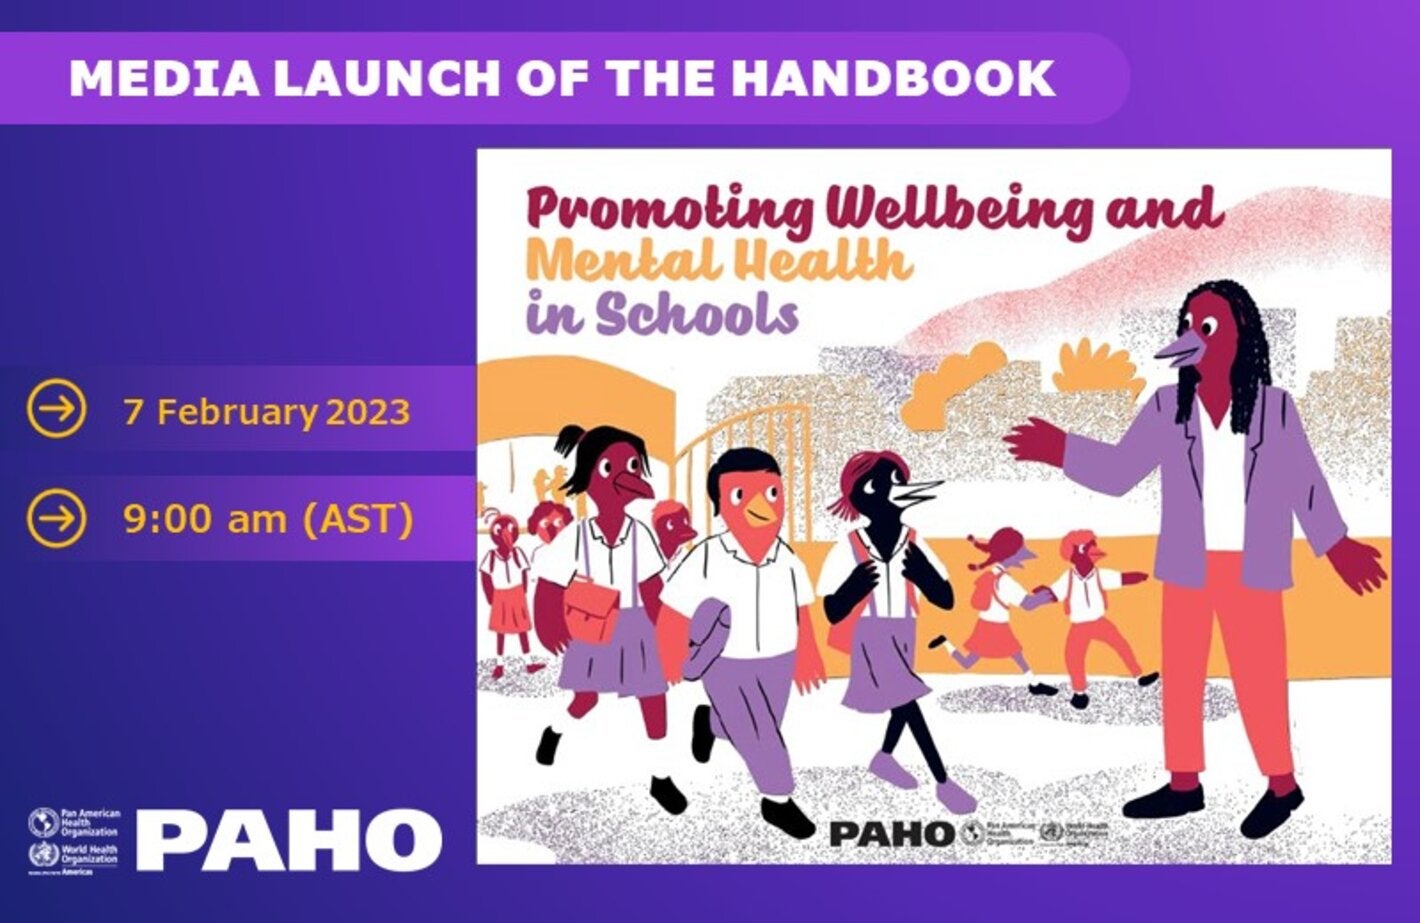 Media Launch: Handbook on Promoting Wellbeing and Mental Health in Schools Handbook